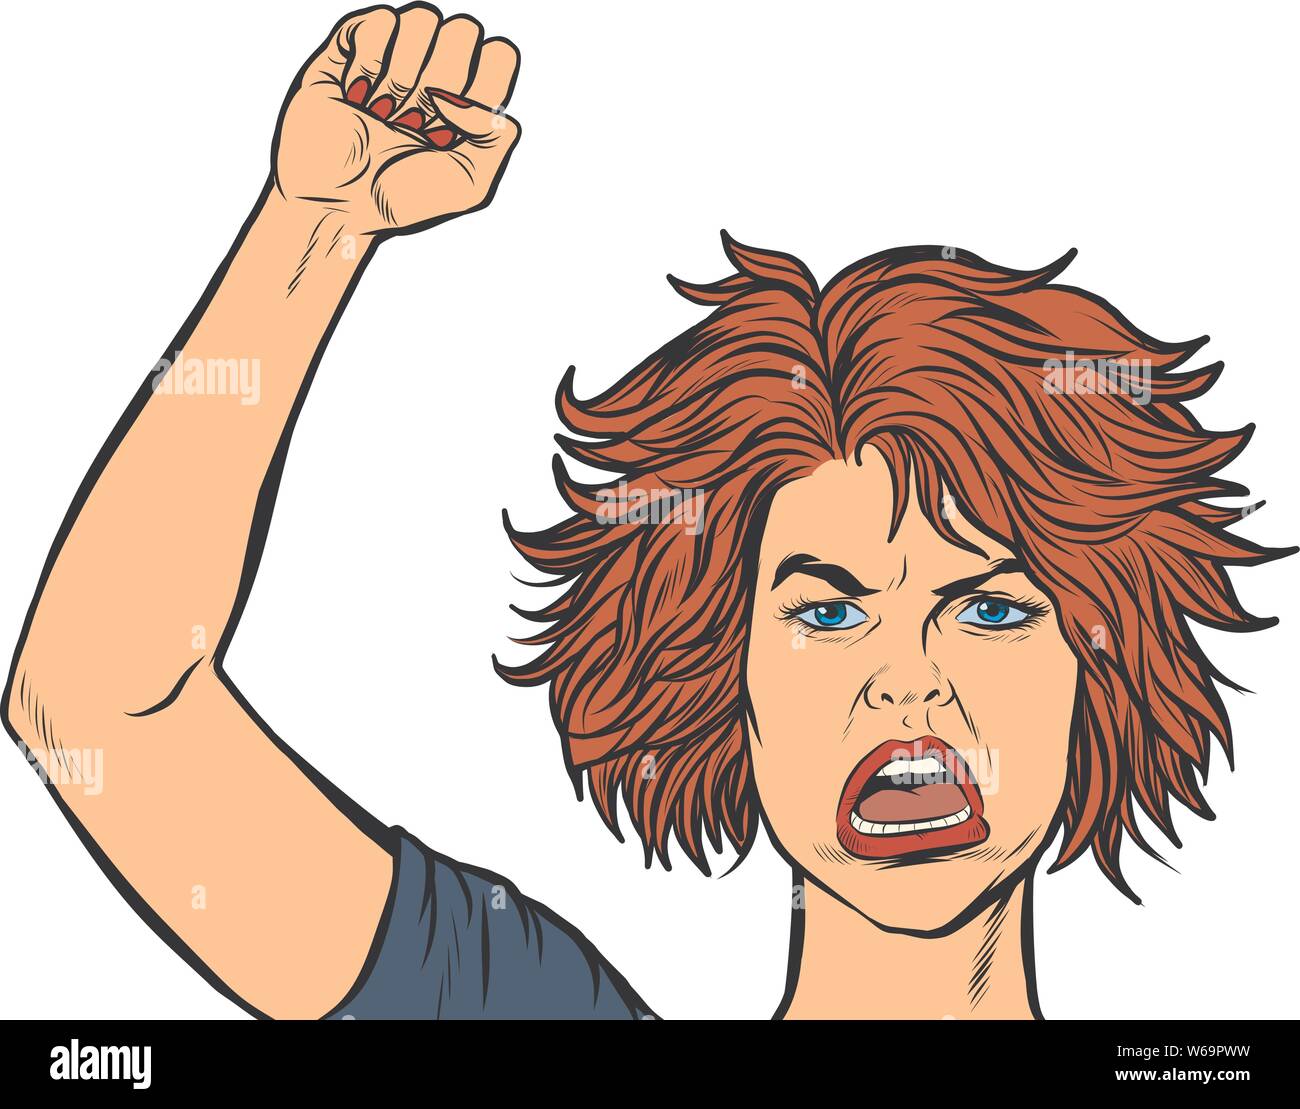 Wütend Demonstrant Frau, Rallye widerstand Freiheit Demokratie Stock Vektor